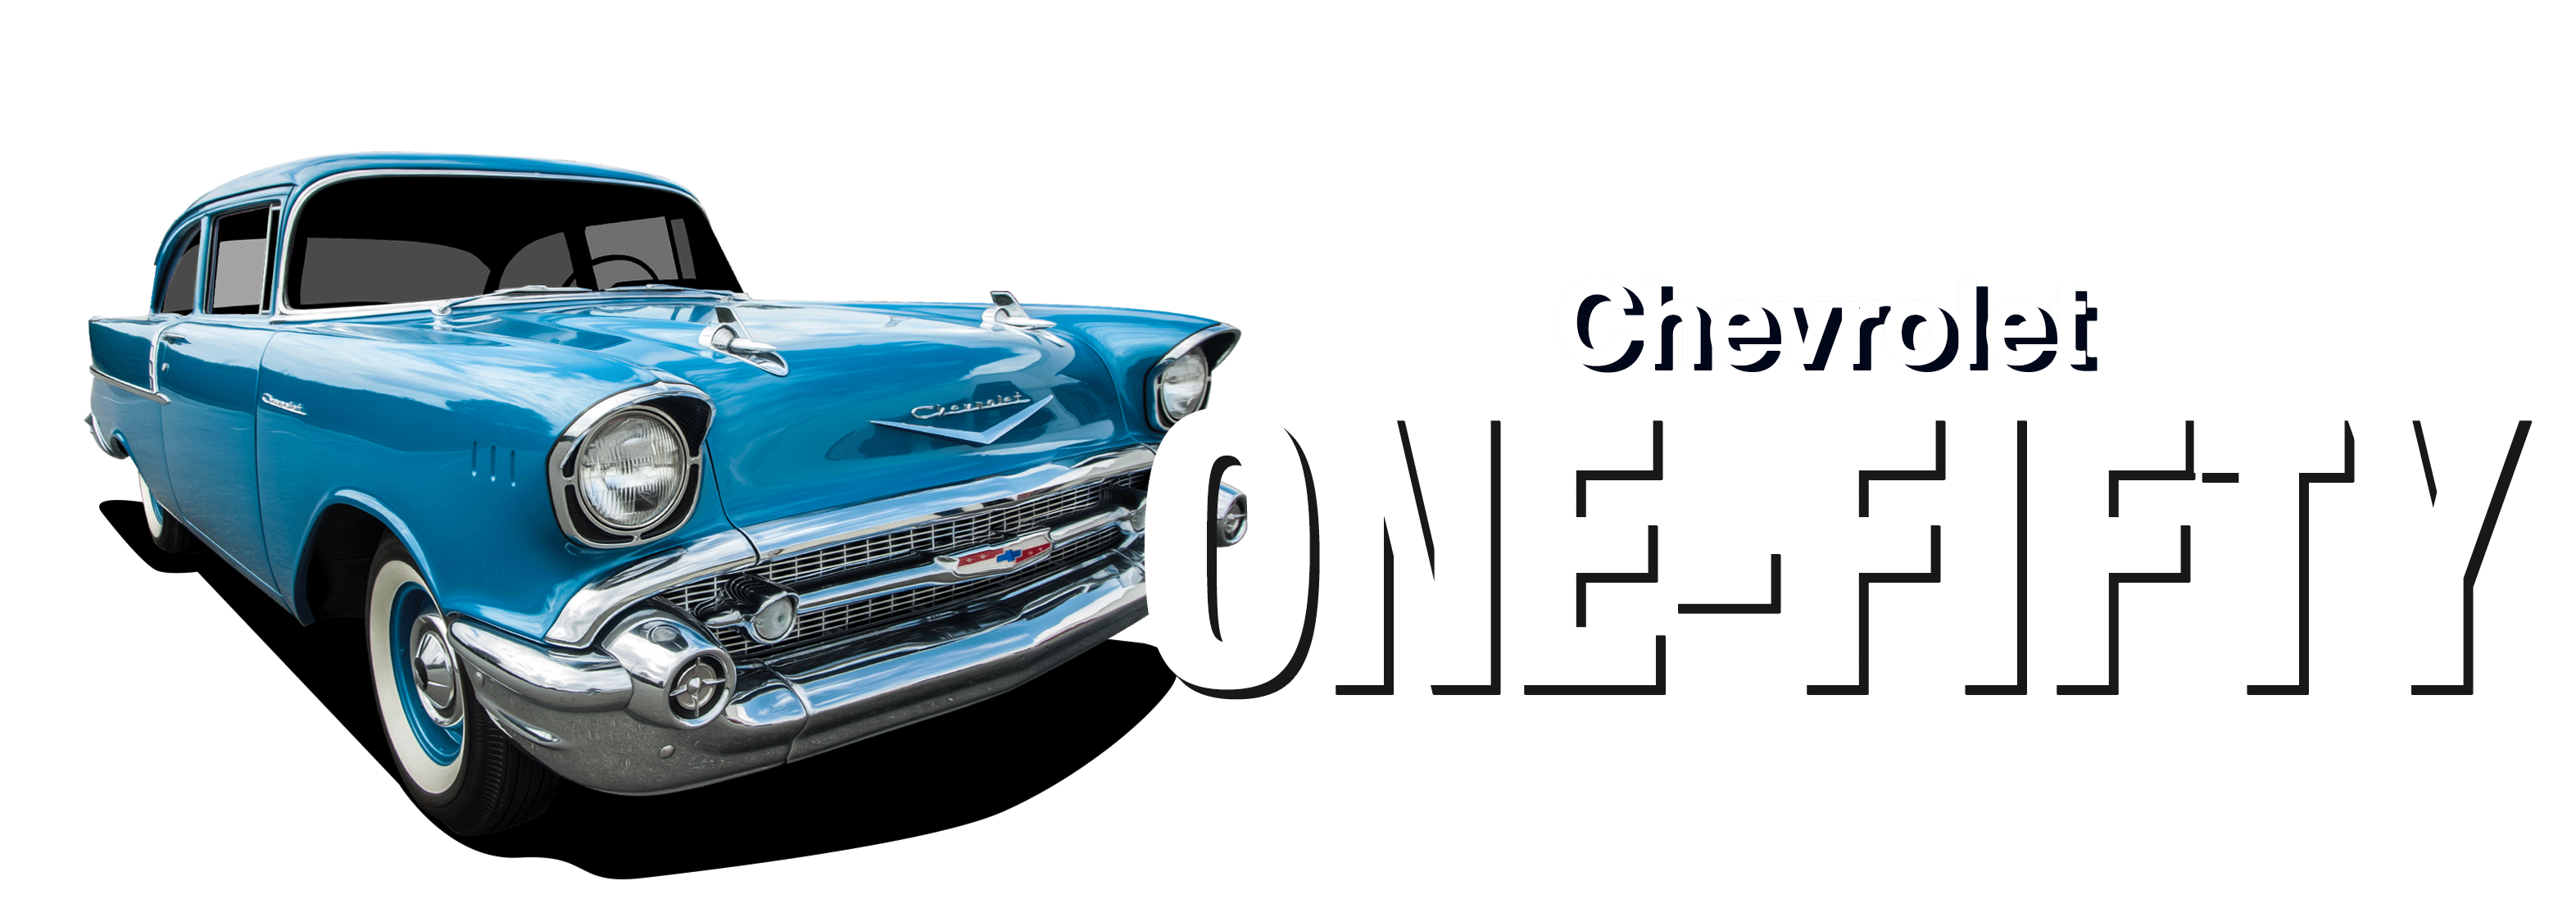 Chevy-OneFifty-vehicle-desktop-2023